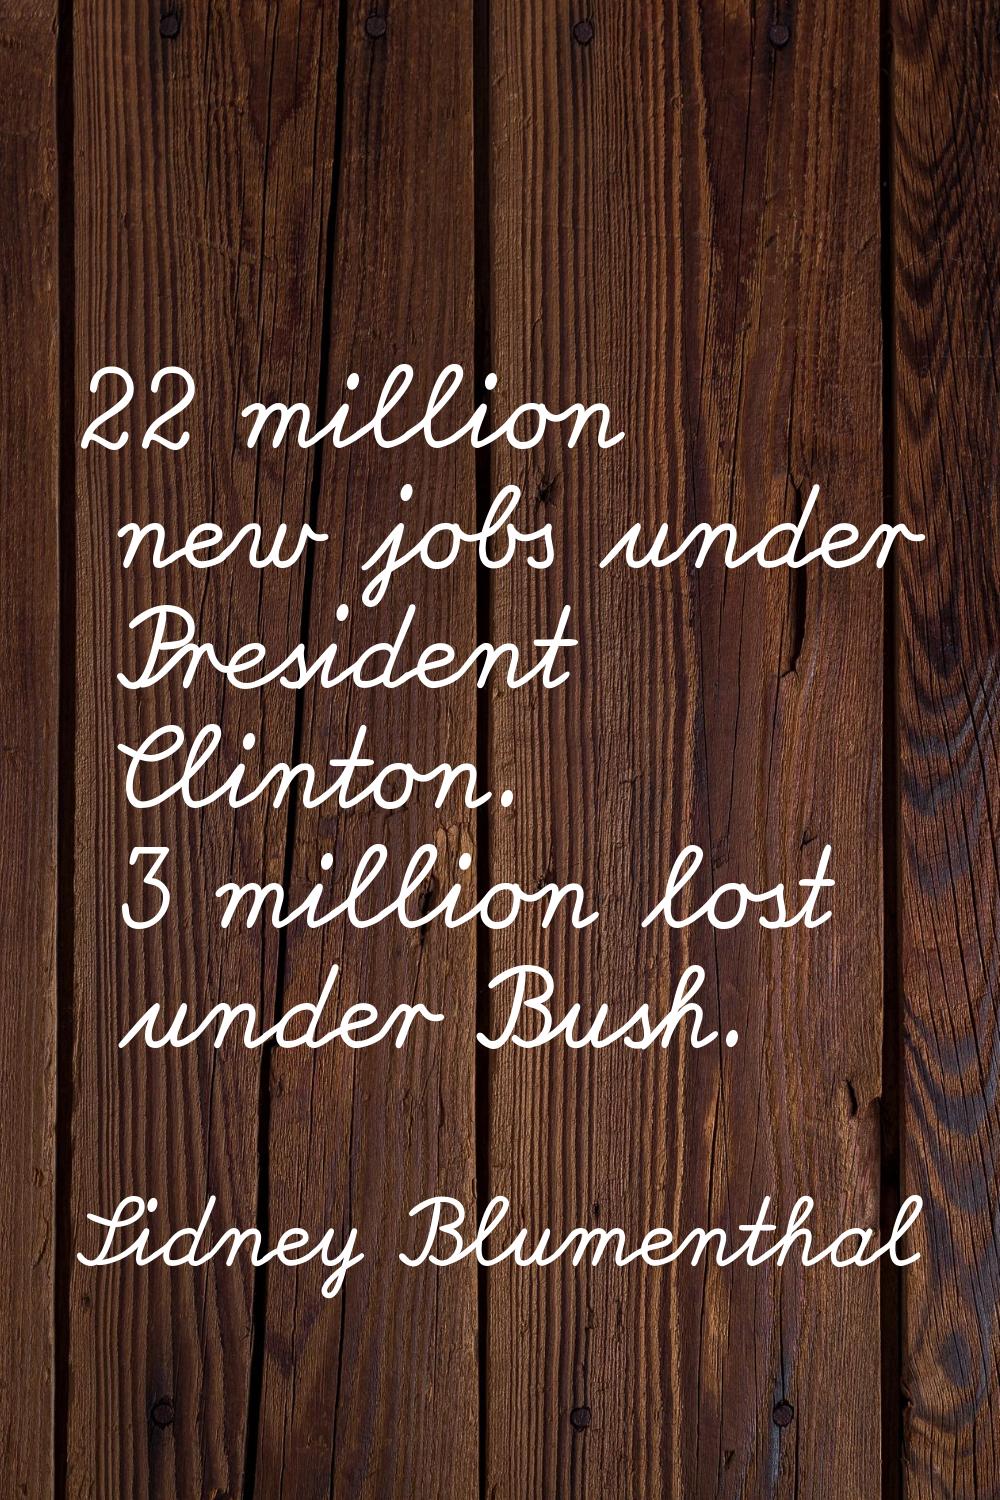 22 million new jobs under President Clinton. 3 million lost under Bush.